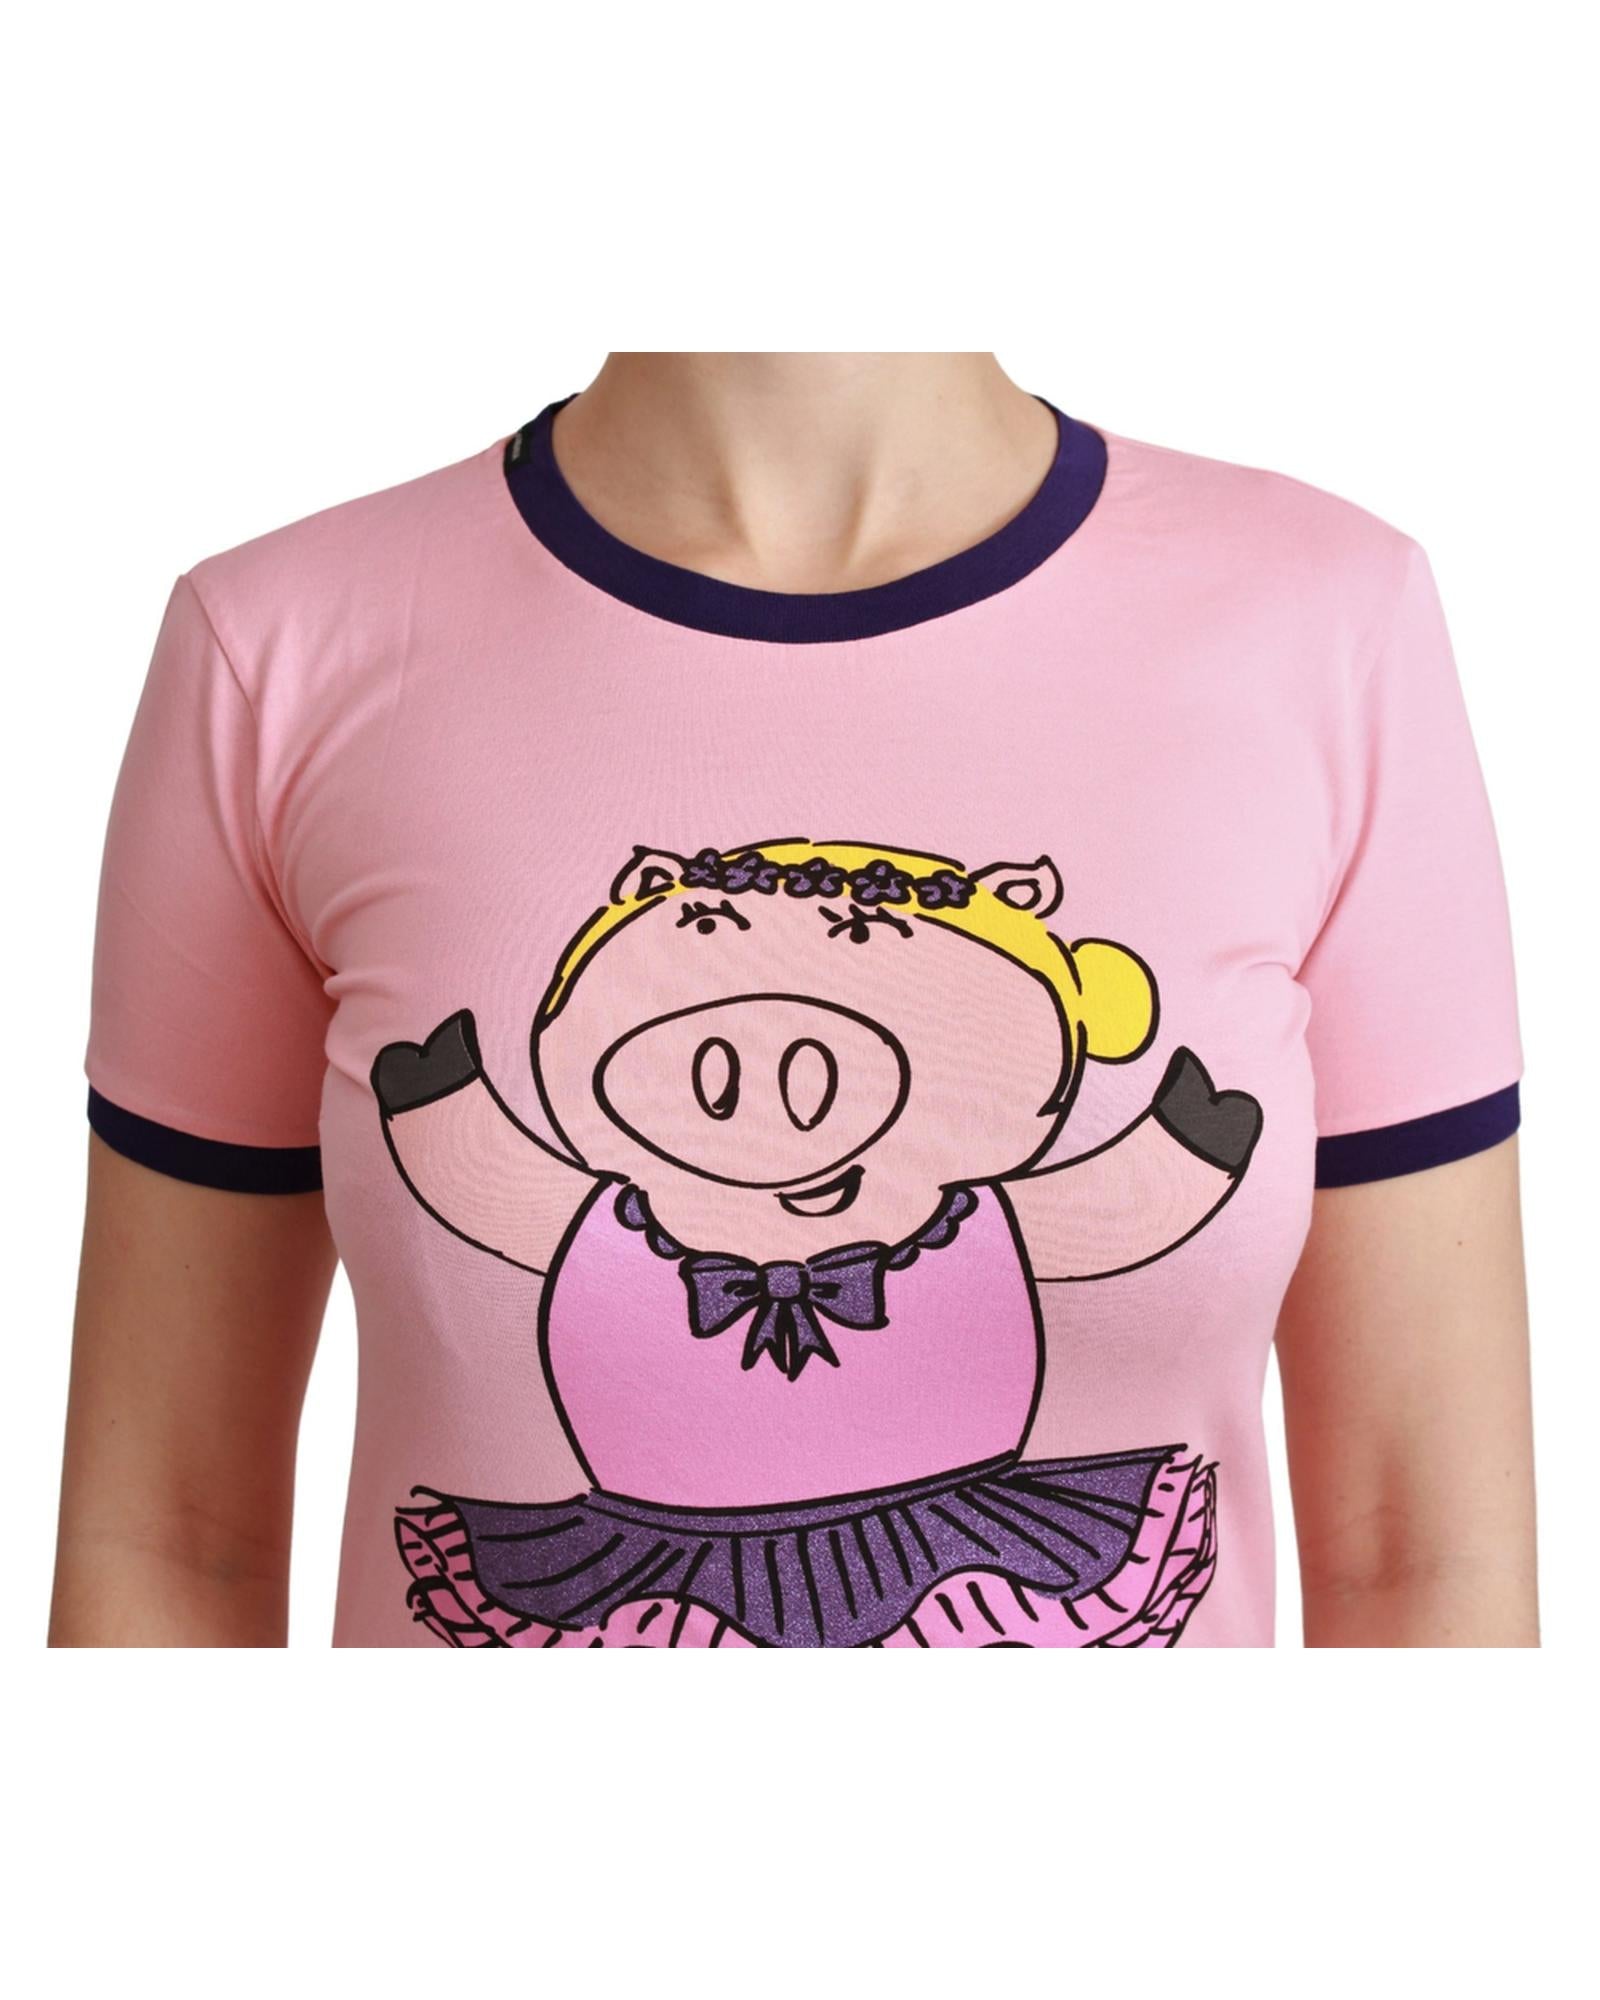 Year of the Pig 2019 Crewneck Short Sleeve T-shirt by Dolce & Gabbana 42 IT Women